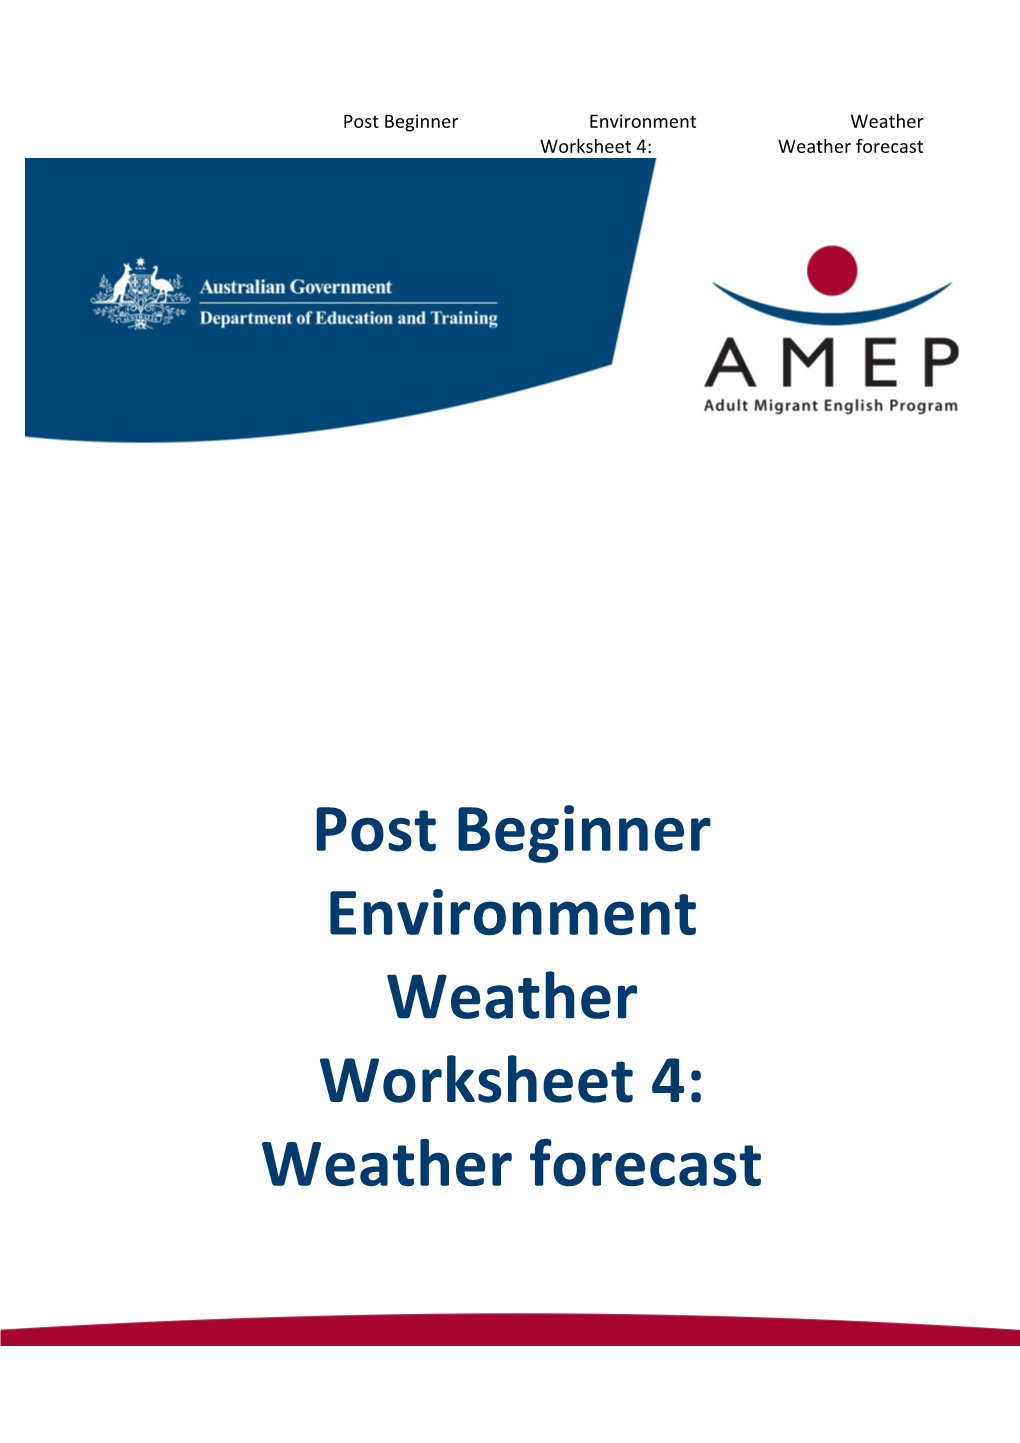 Post Beginner Environment Weather Worksheet 4: Weather Forecast